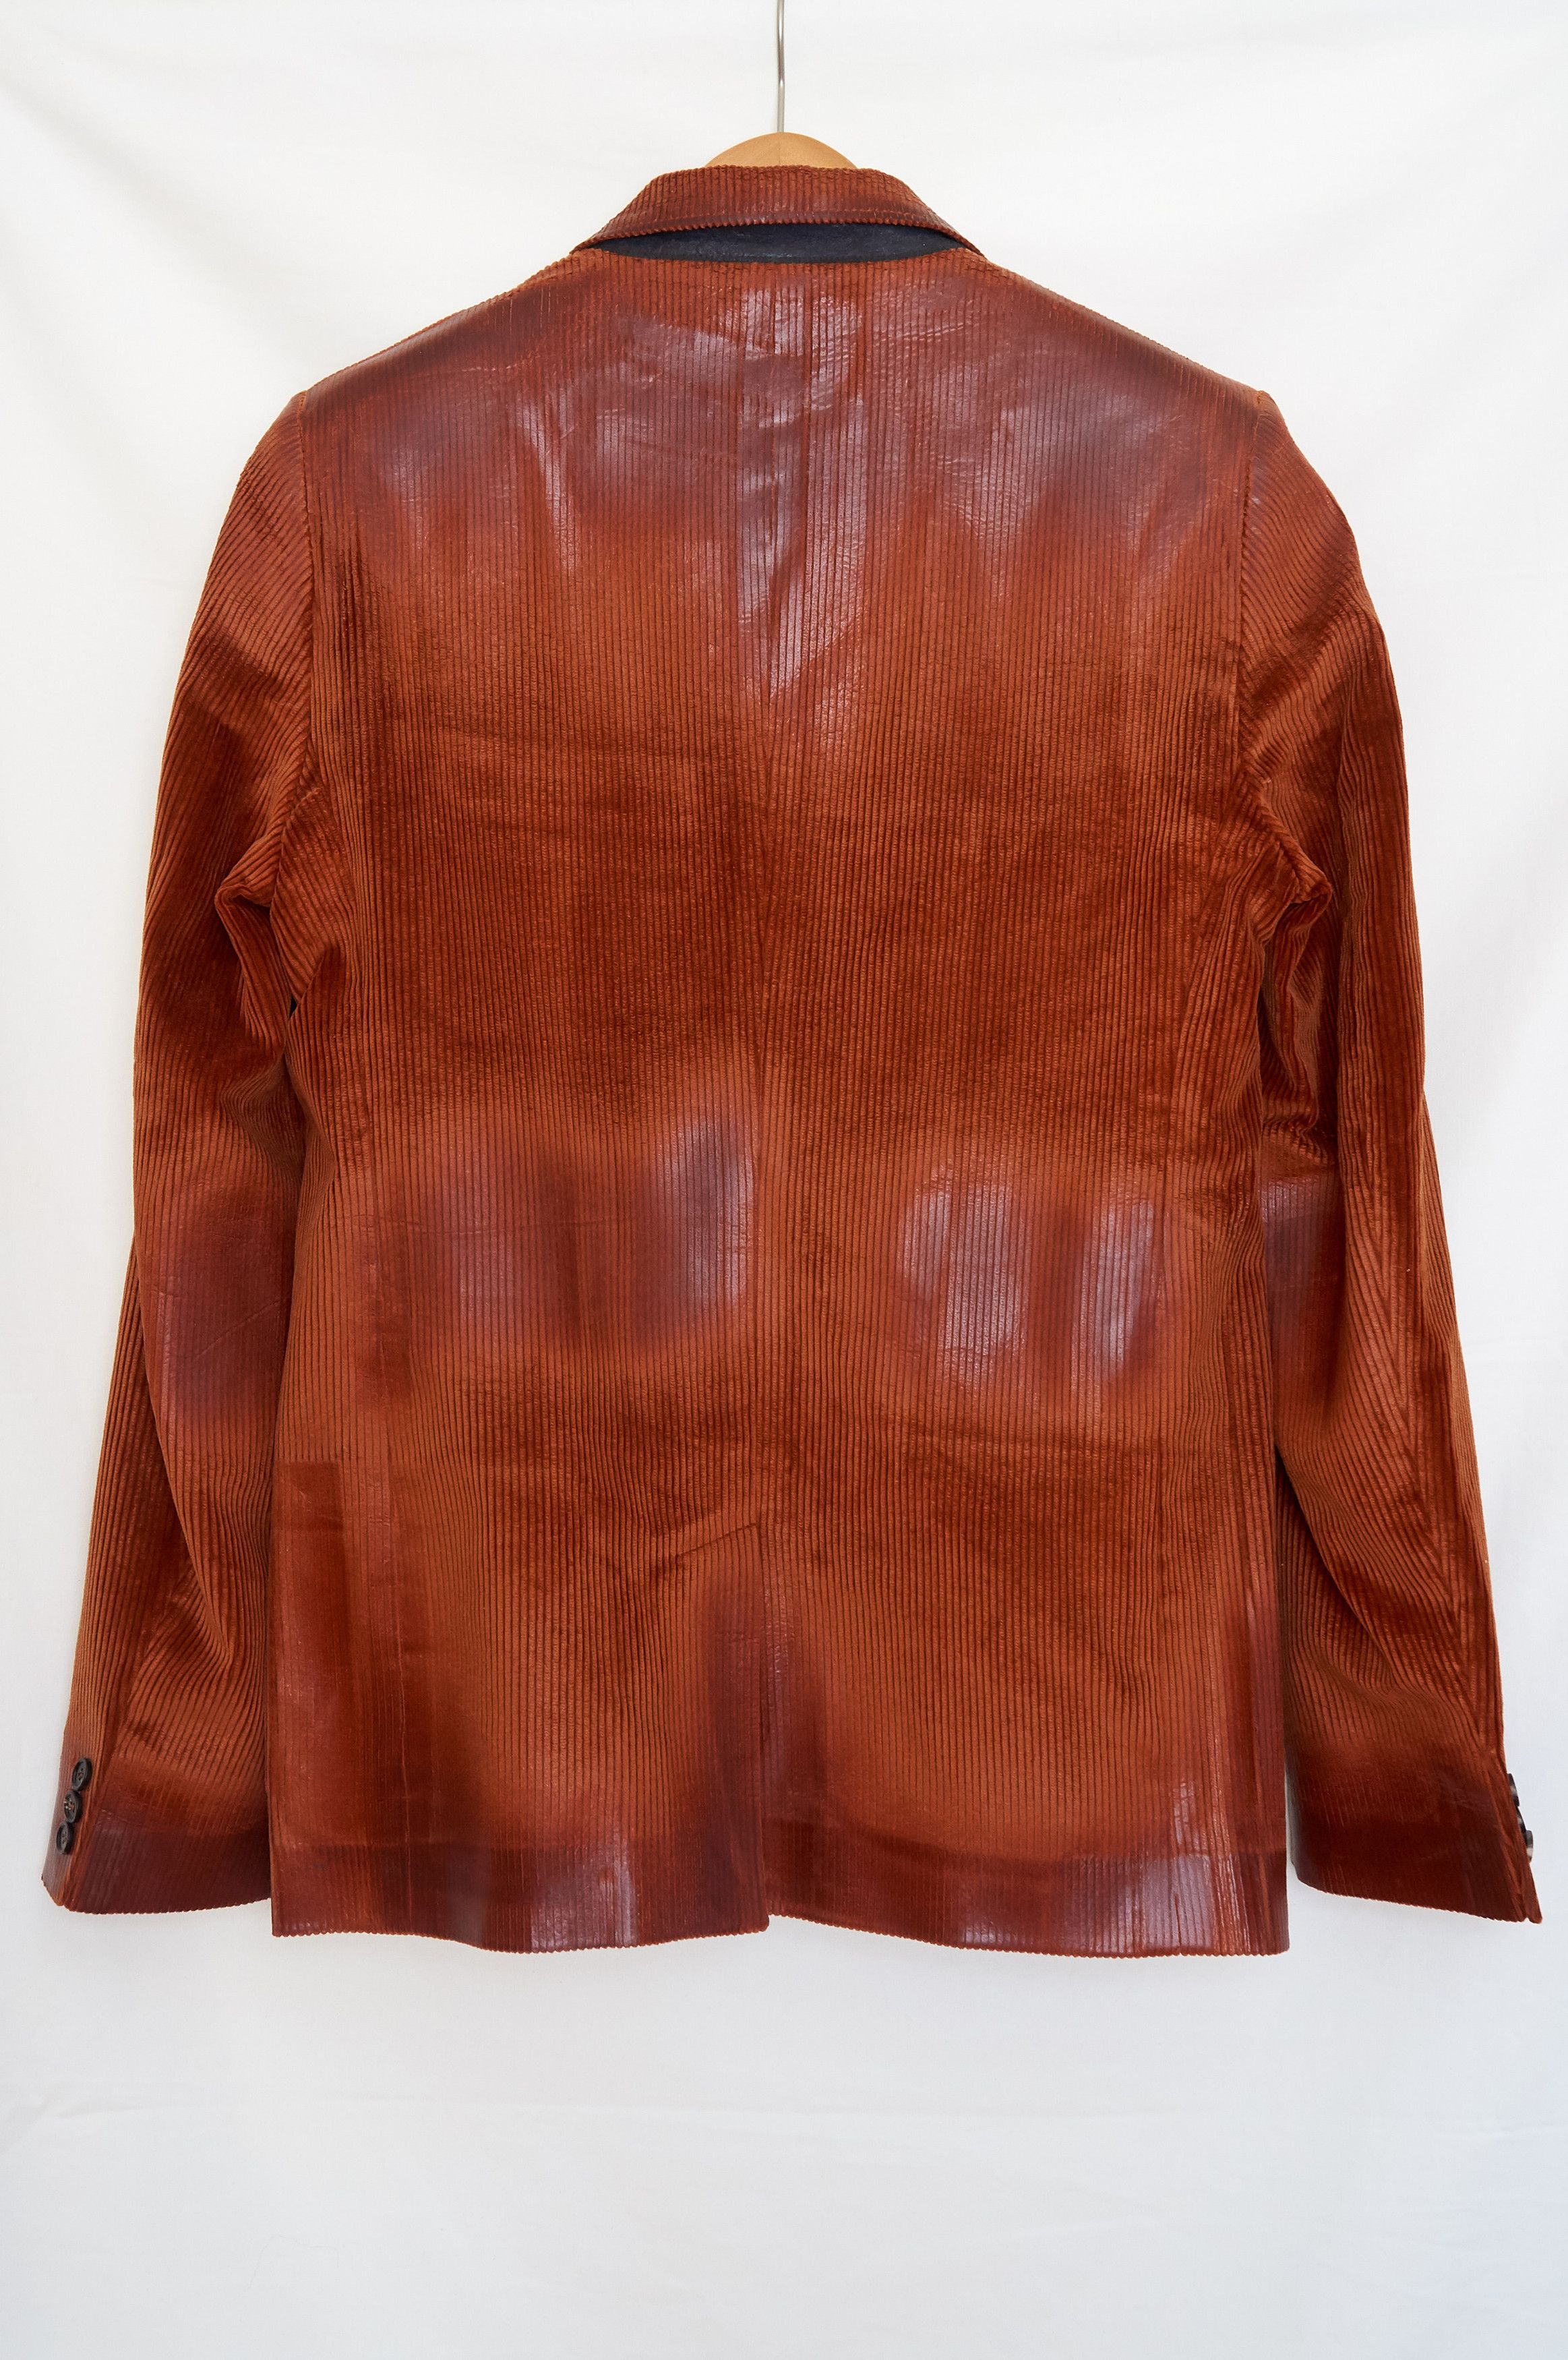 Marni AW20 waxed corduroy jacket | Grailed